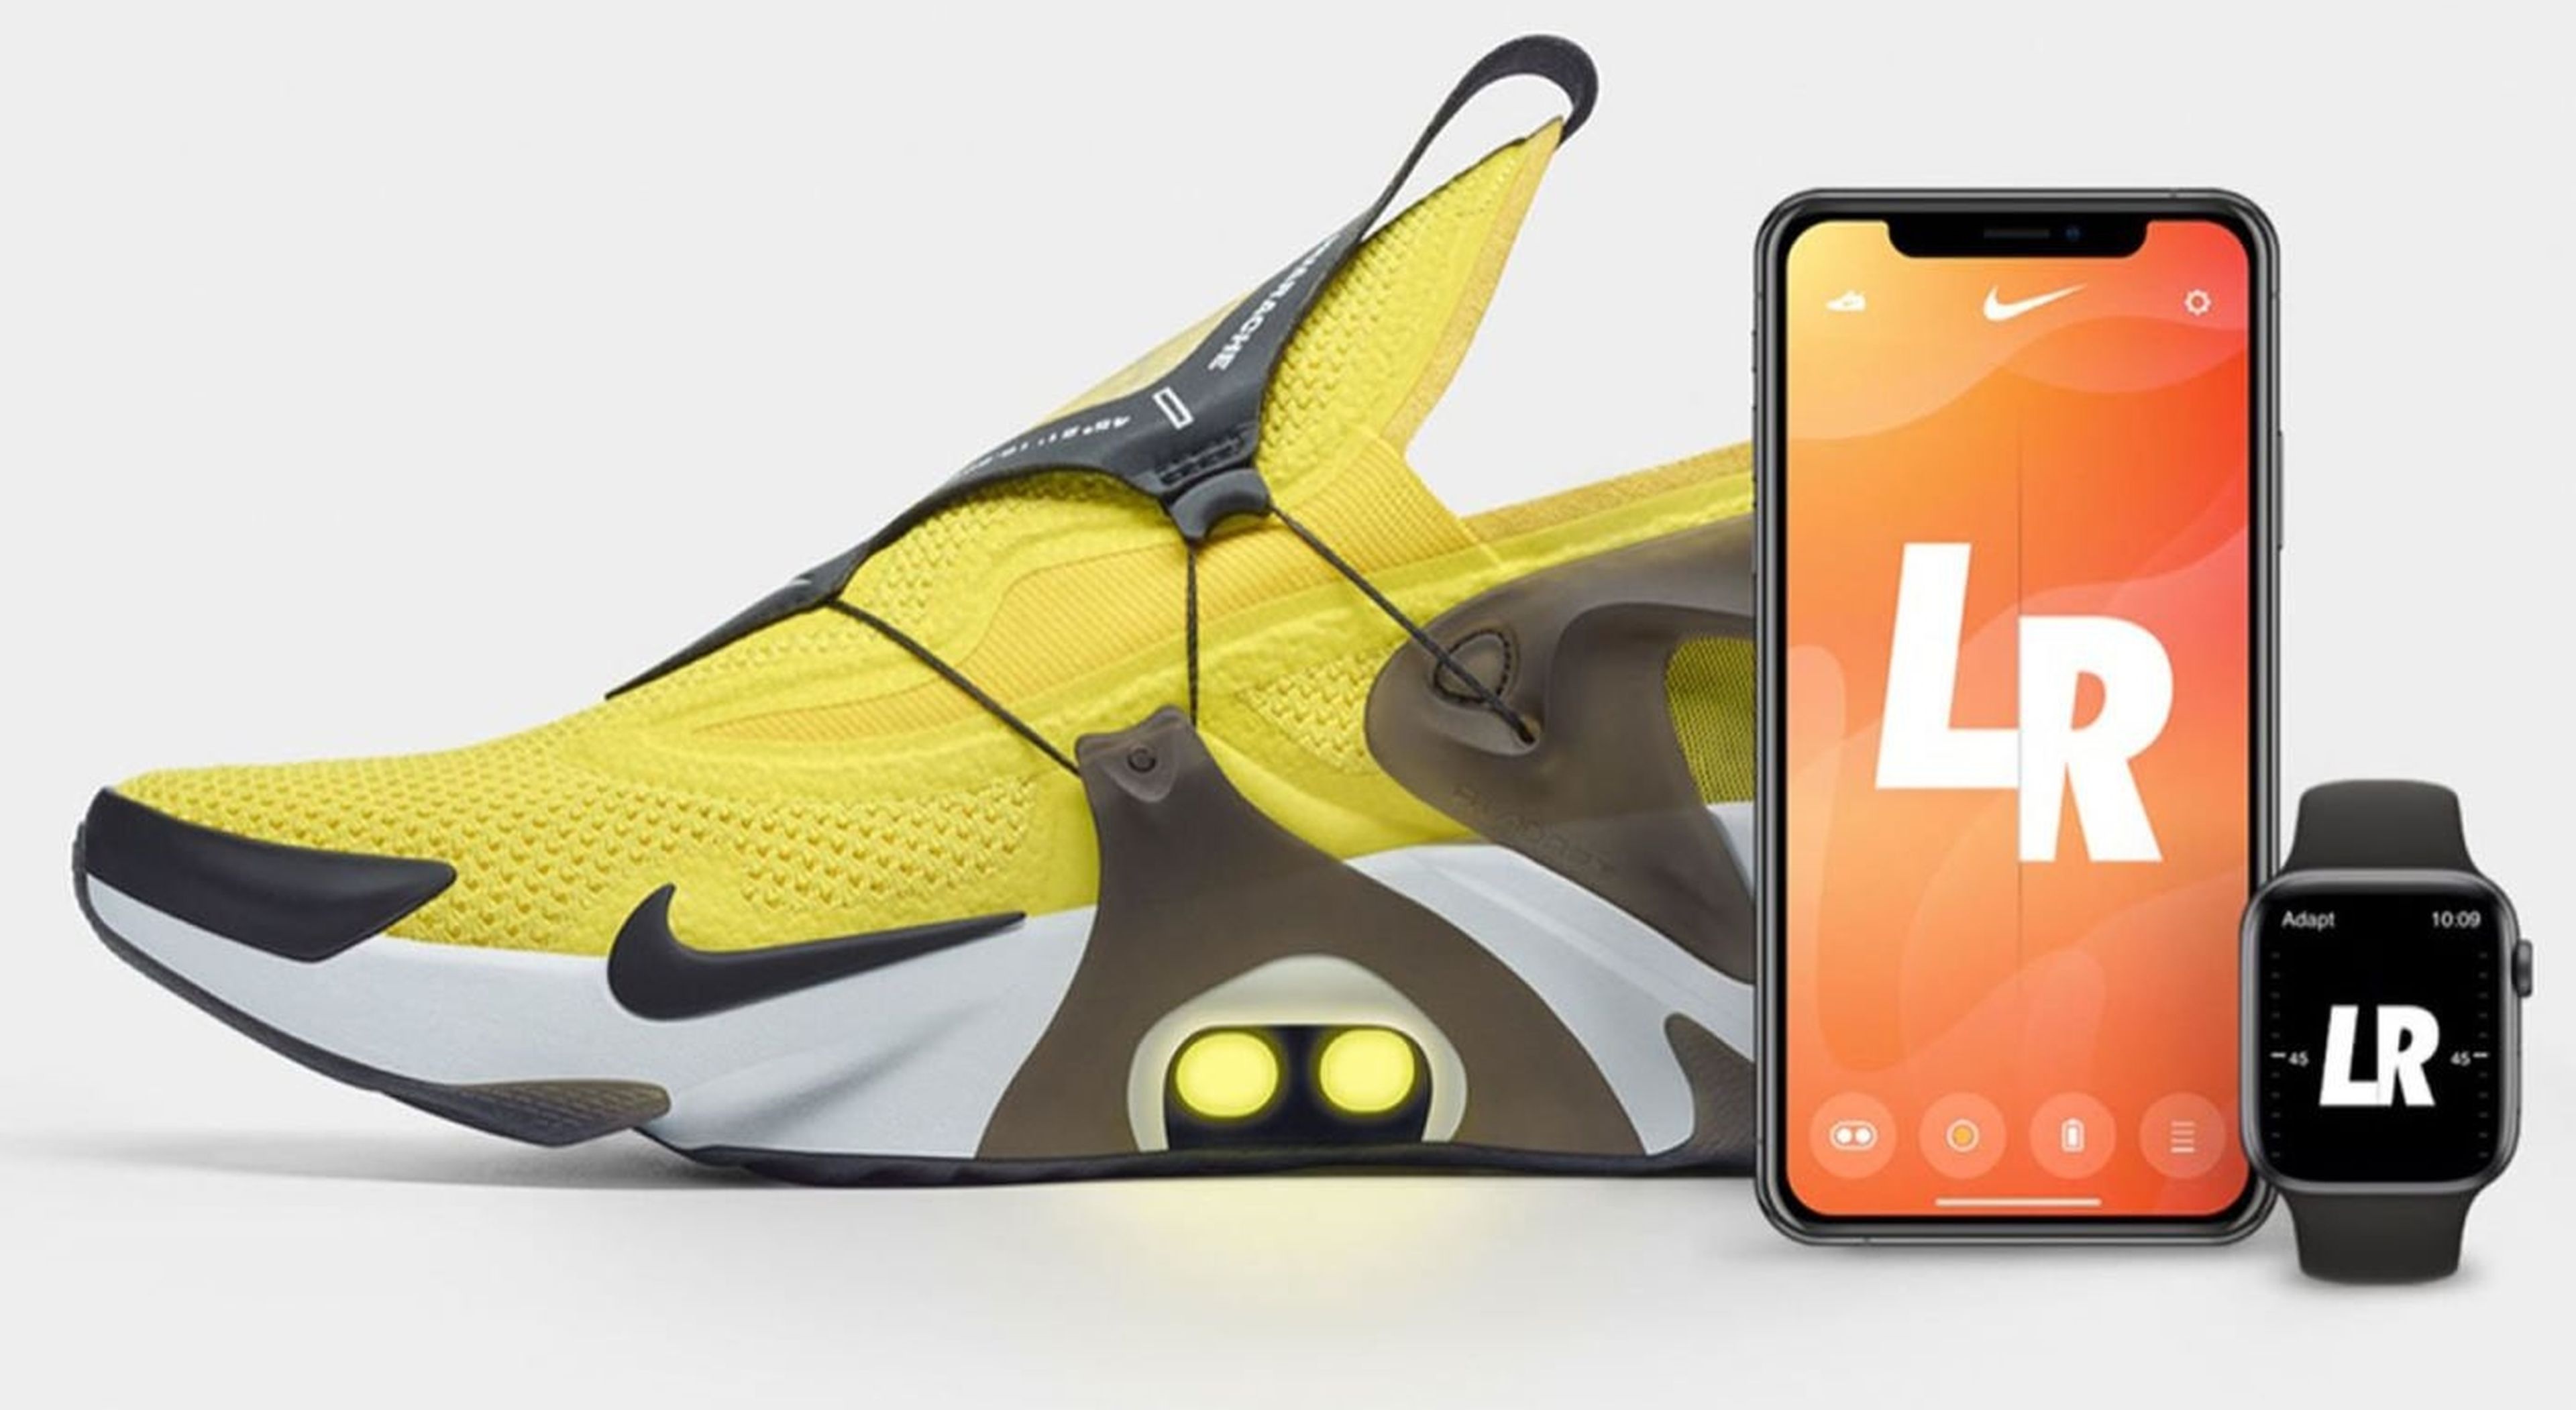 átame las zapatillas: las Nike Huarache se atan con de voz | Computer